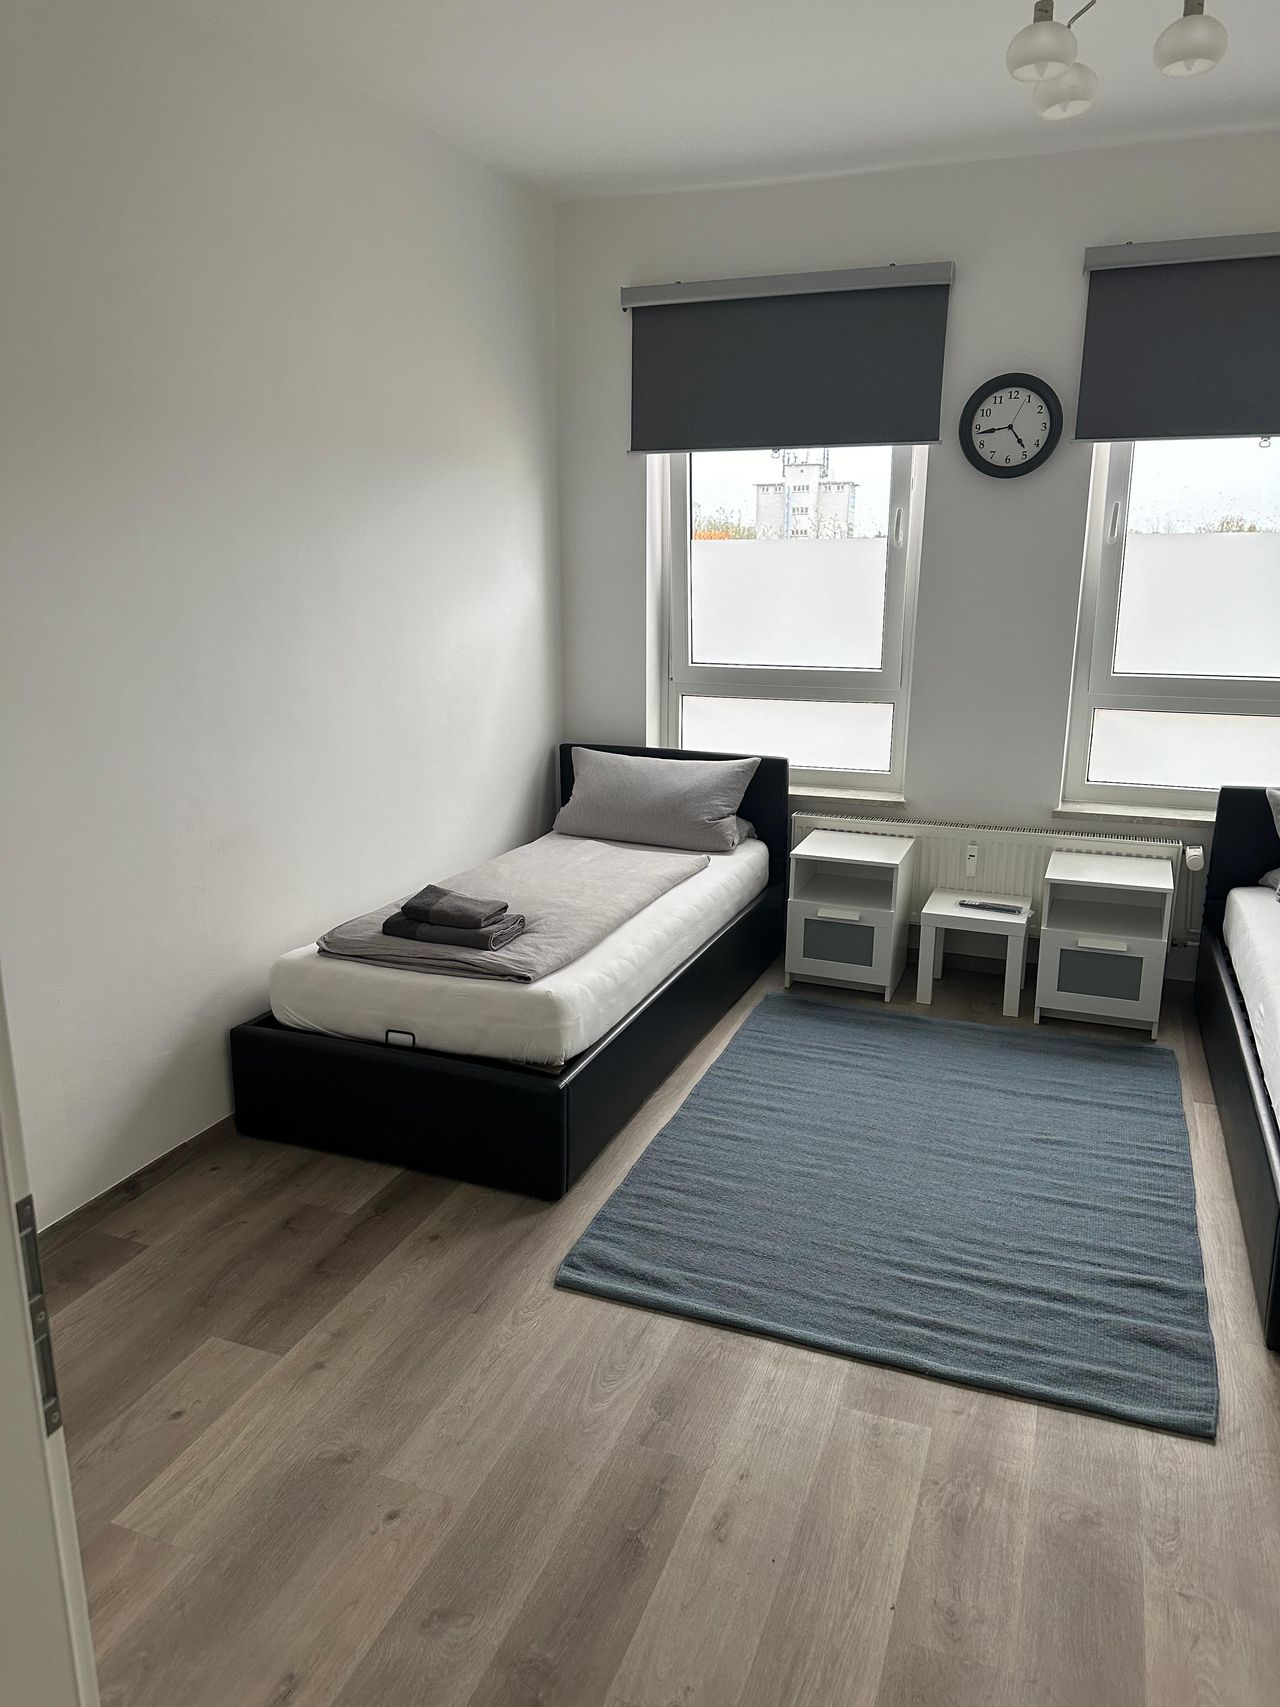 Newly renovated spacious flat in Kiel